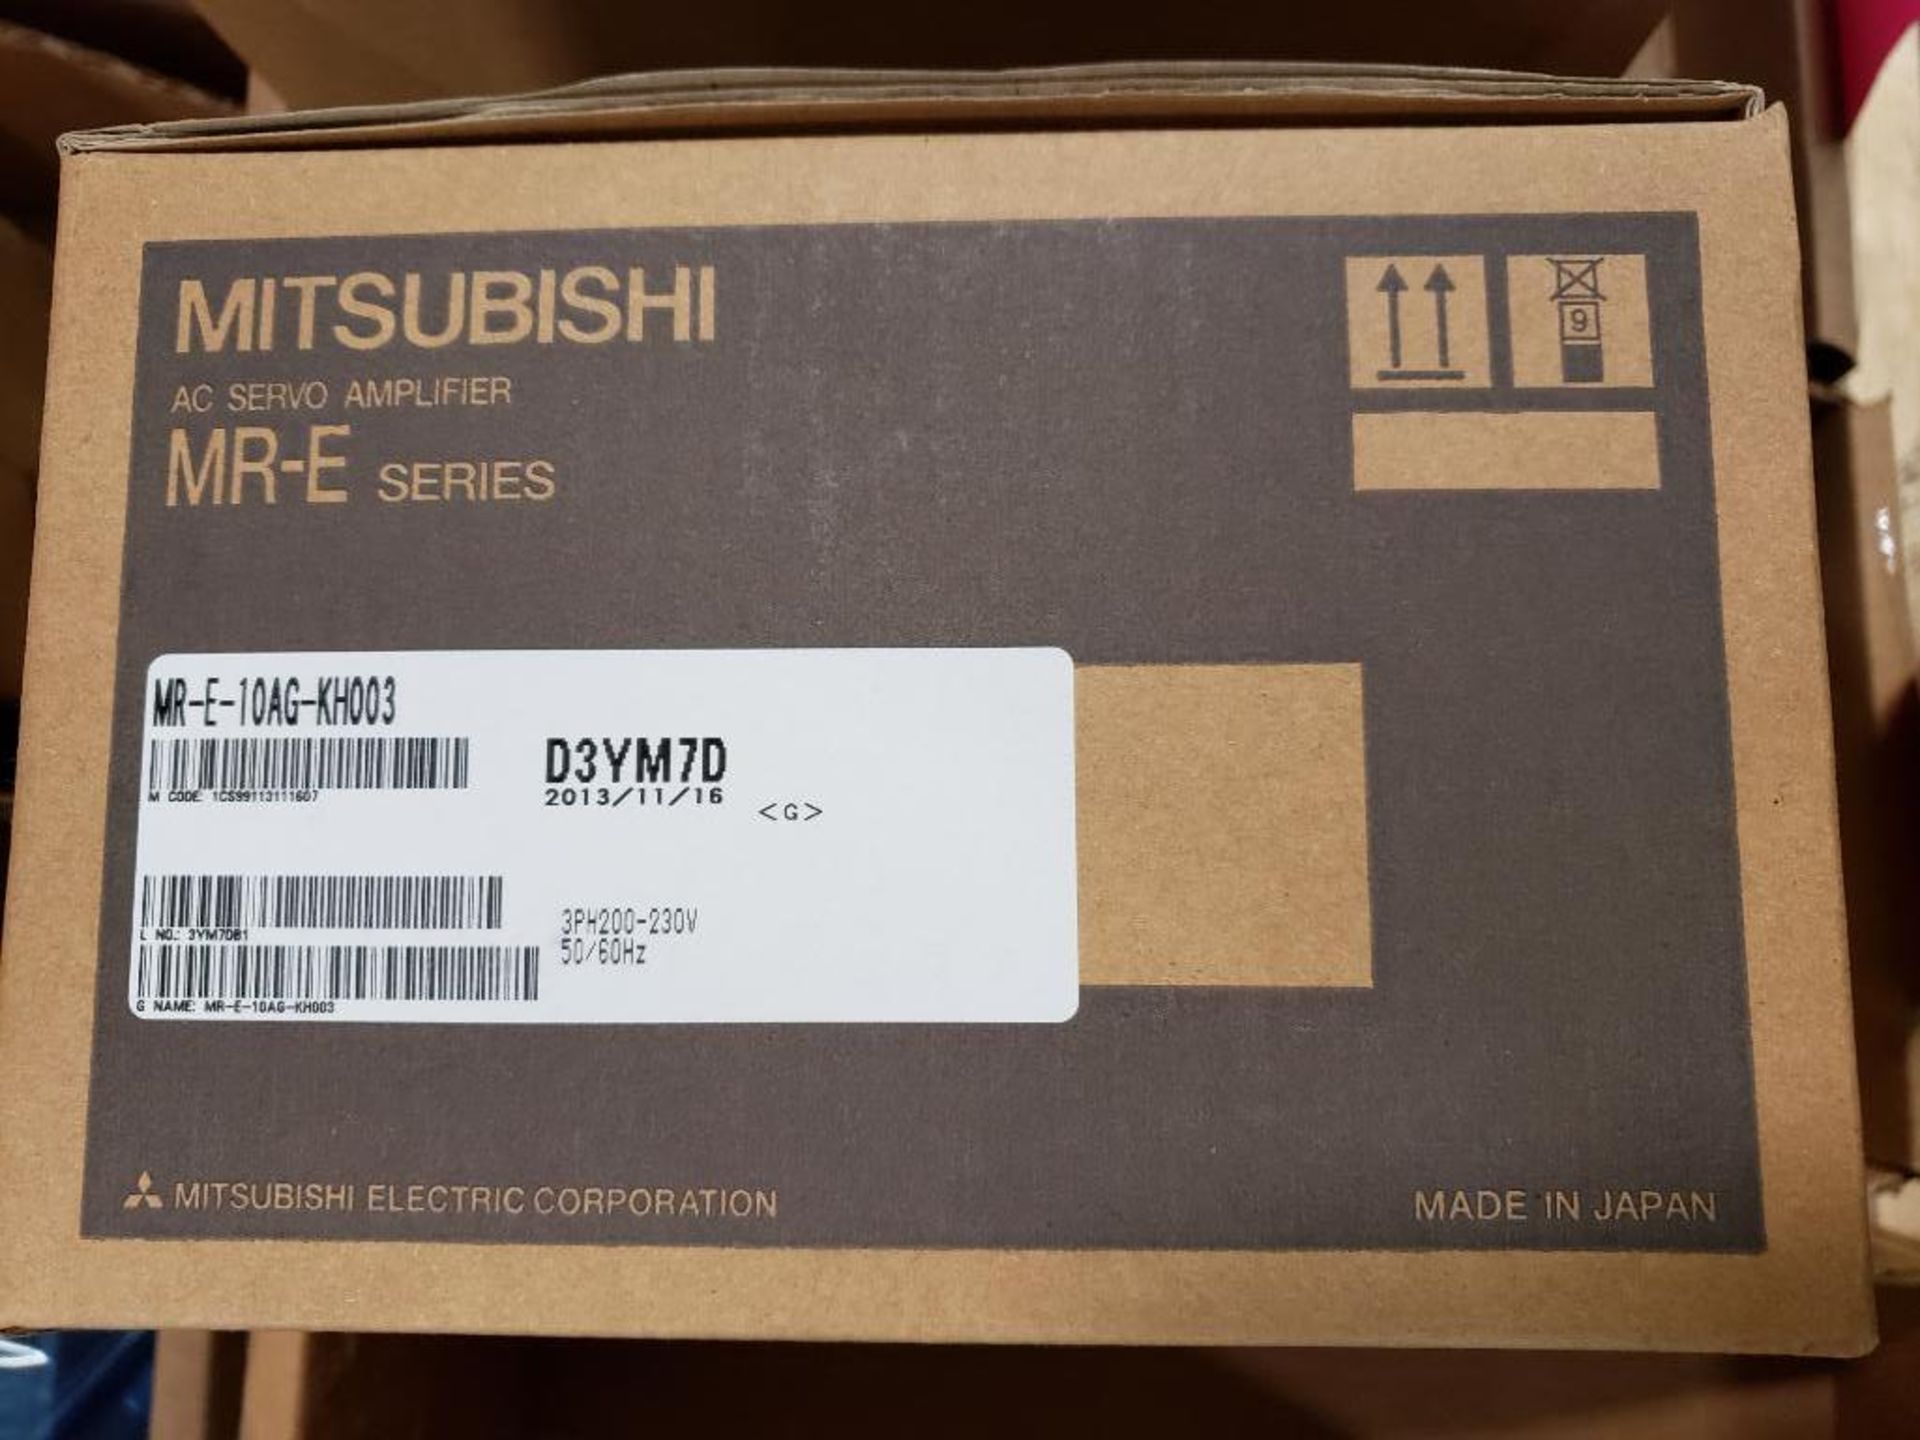 Mitsubishi MR-E-10AG-KH003 AC servo amplifier. New in box. - Image 3 of 4